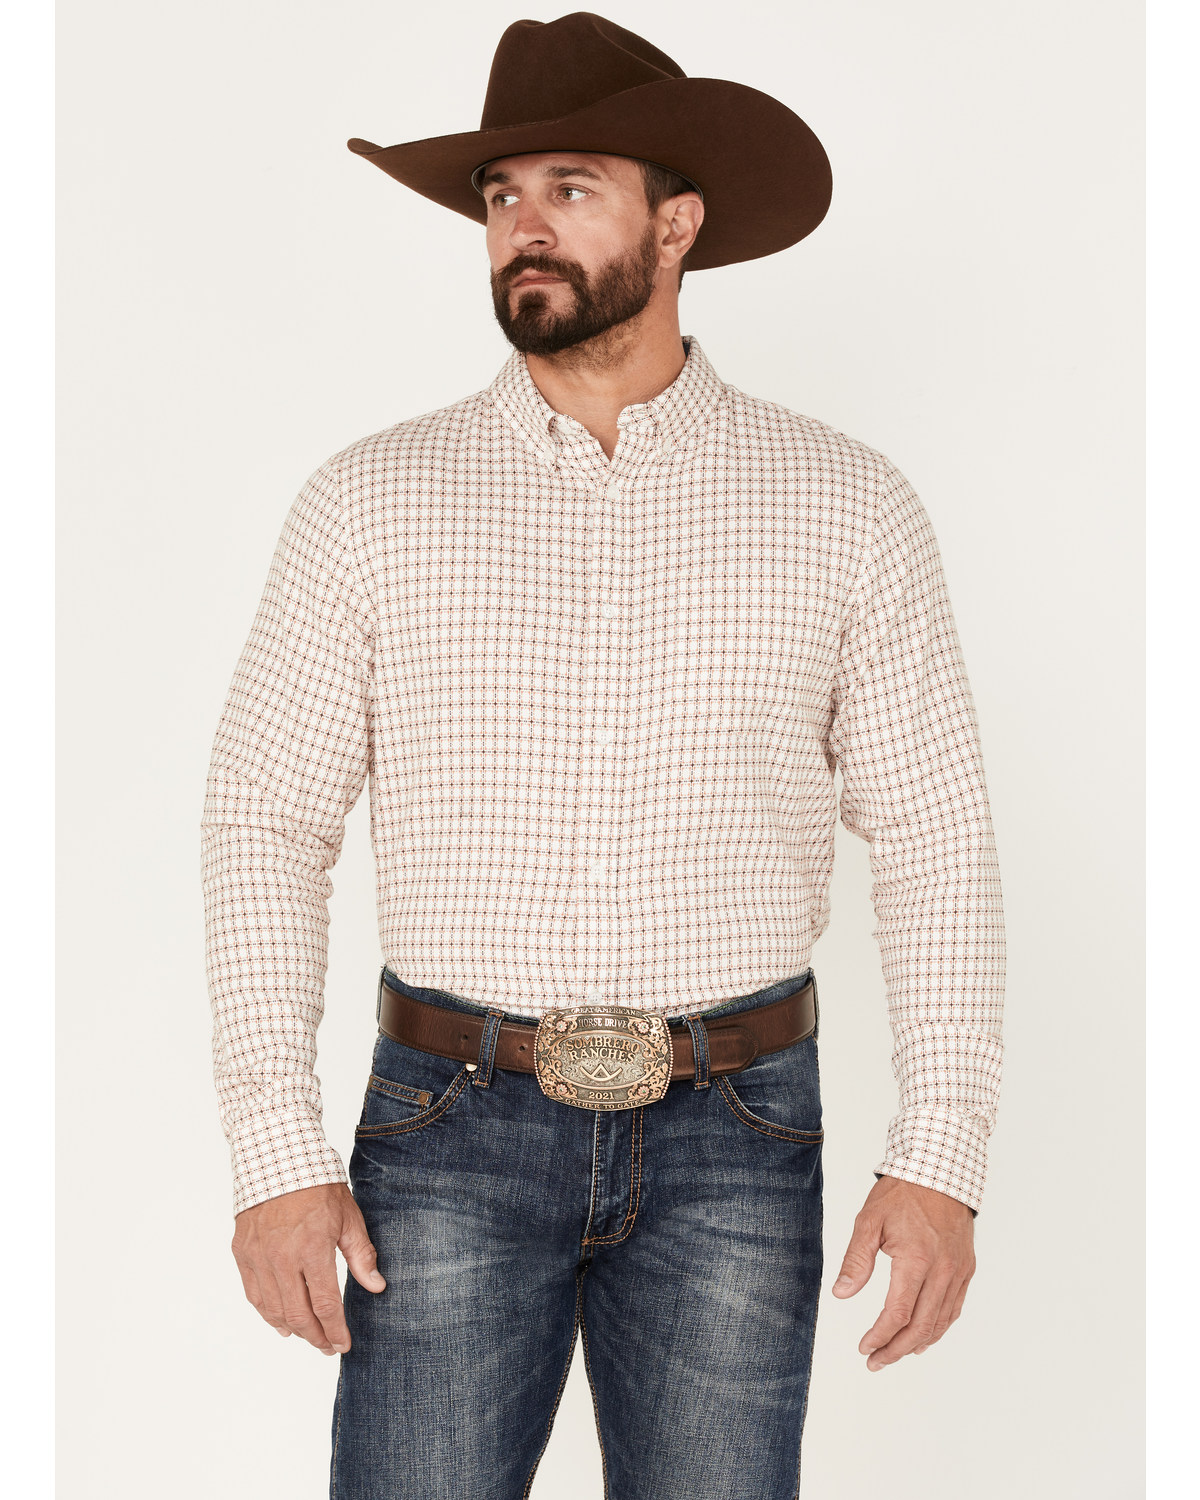 Cody James Men's Getaway Check Button-Down Western Shirt